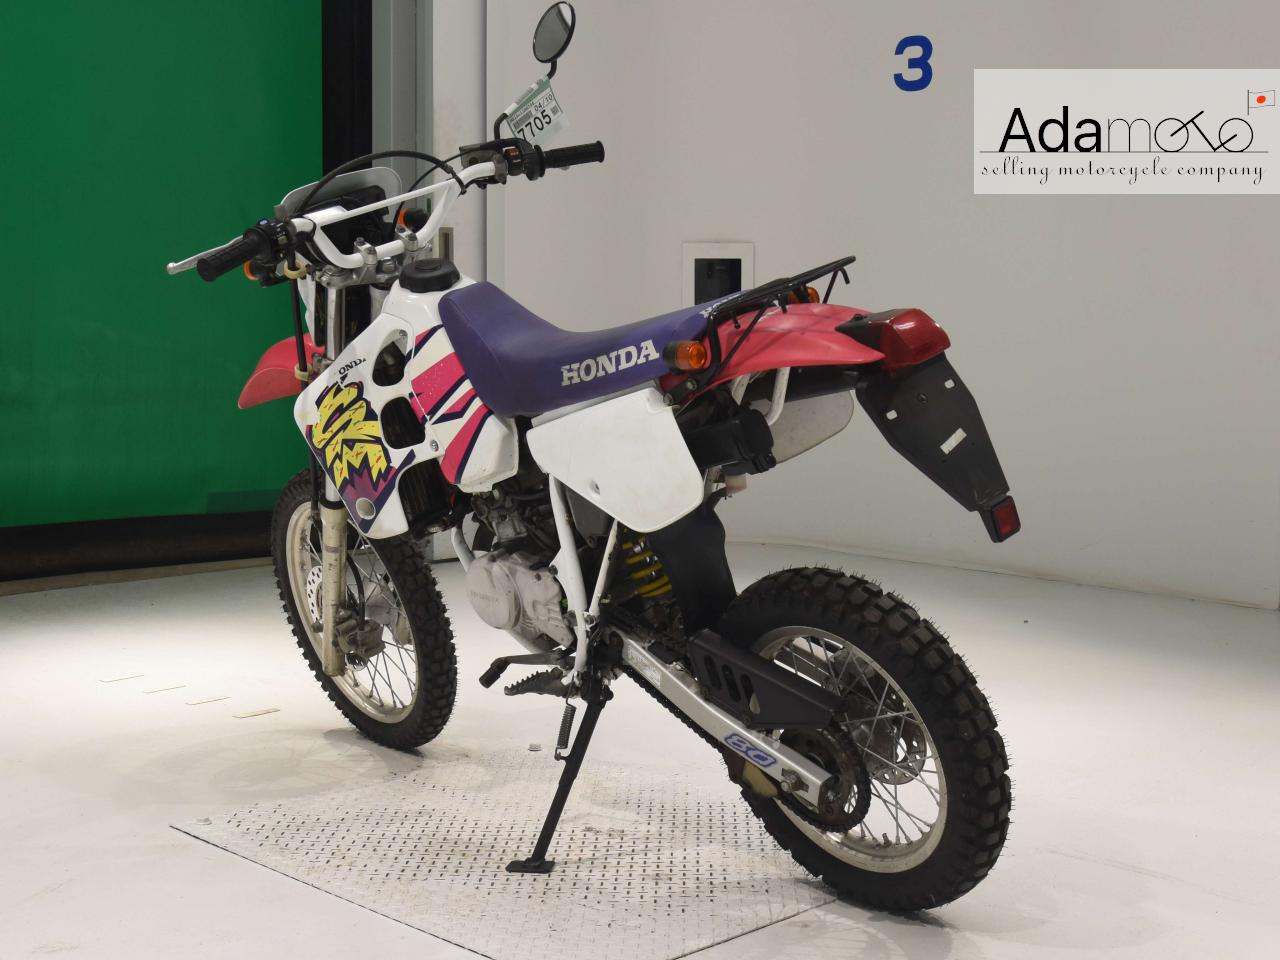 Honda CRM80-2 - Adamoto - Motorcycles from Japan